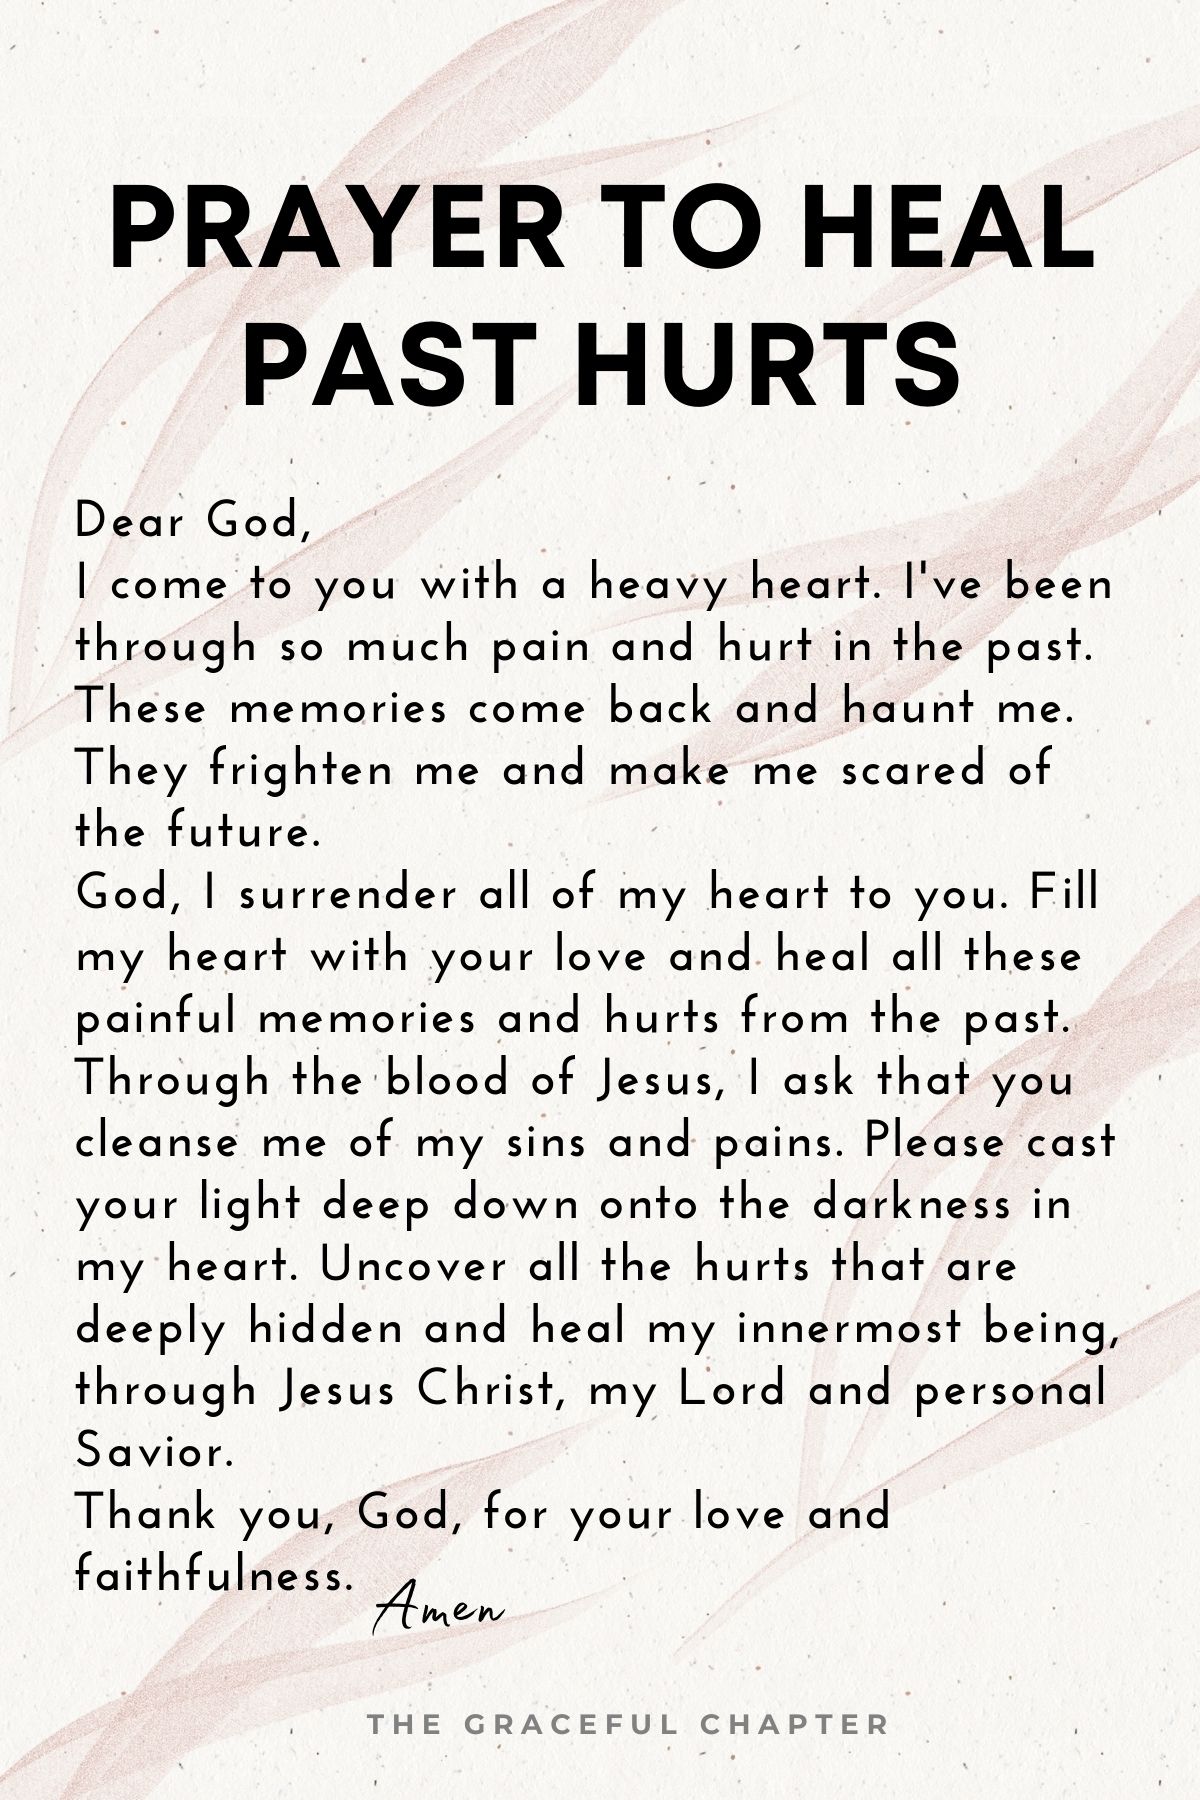 Prayer to heal past hurts - prayers for healing